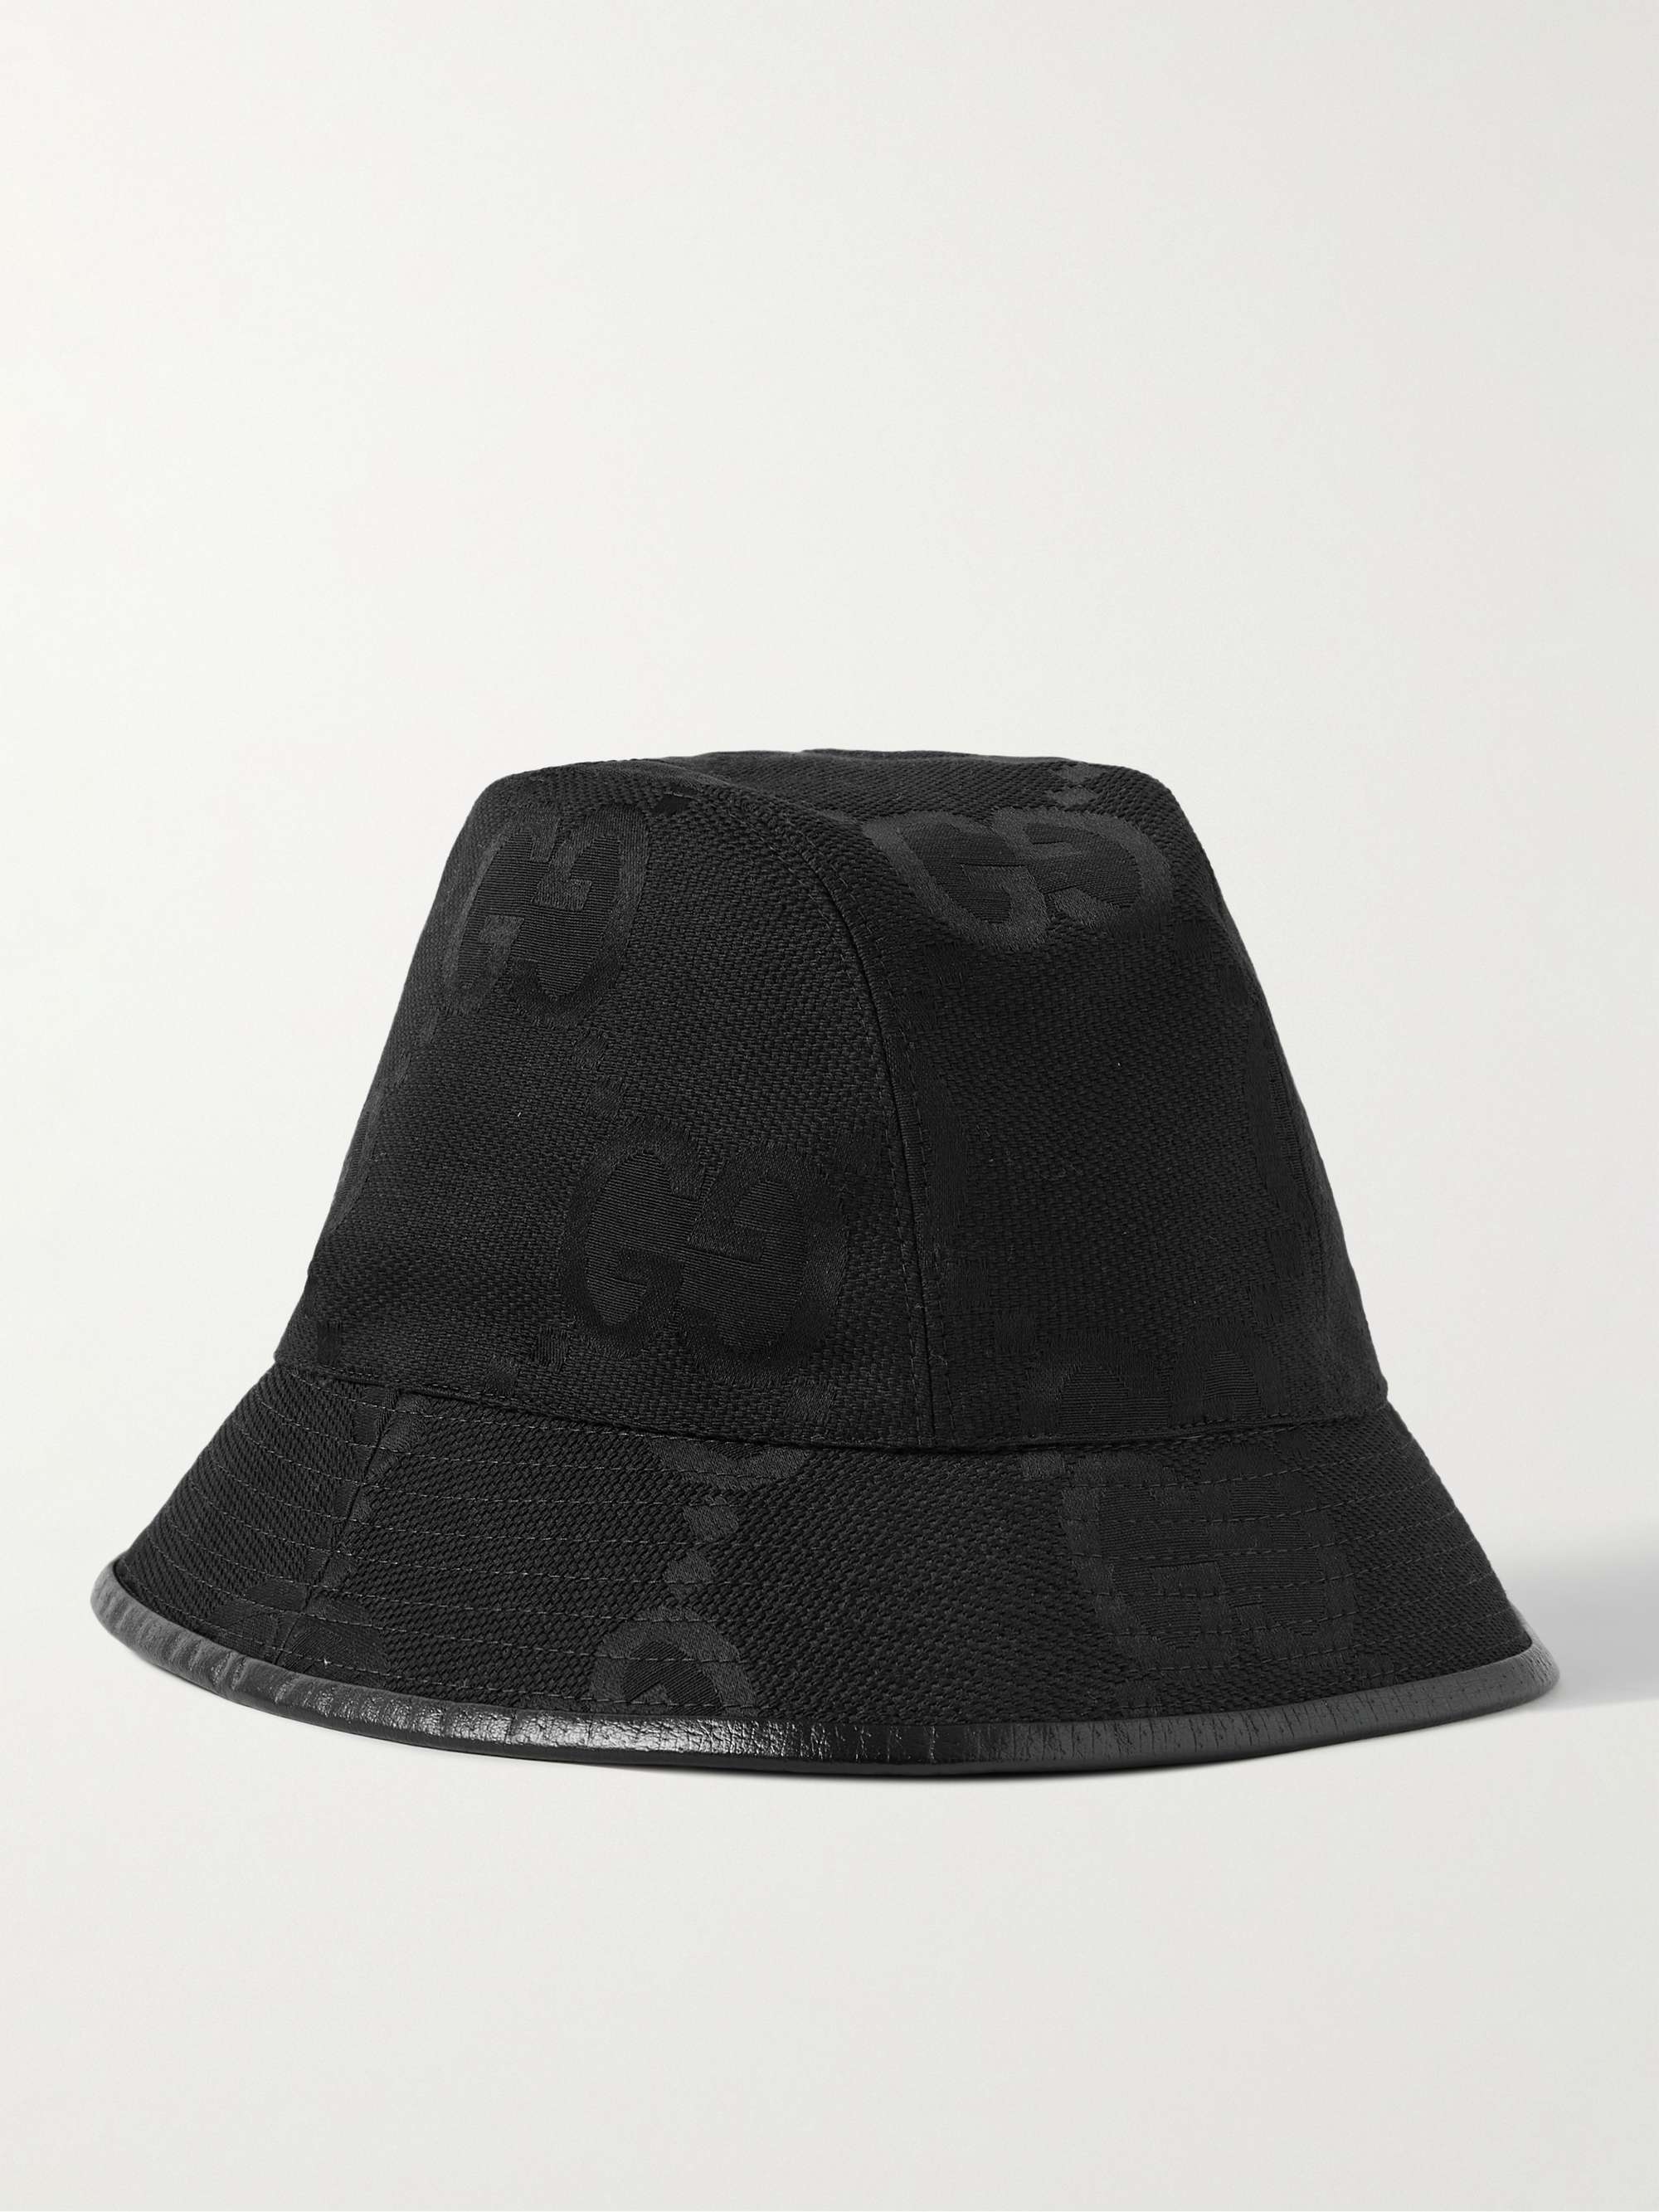 Gg cotton blend canvas bucket hat - Gucci - Men